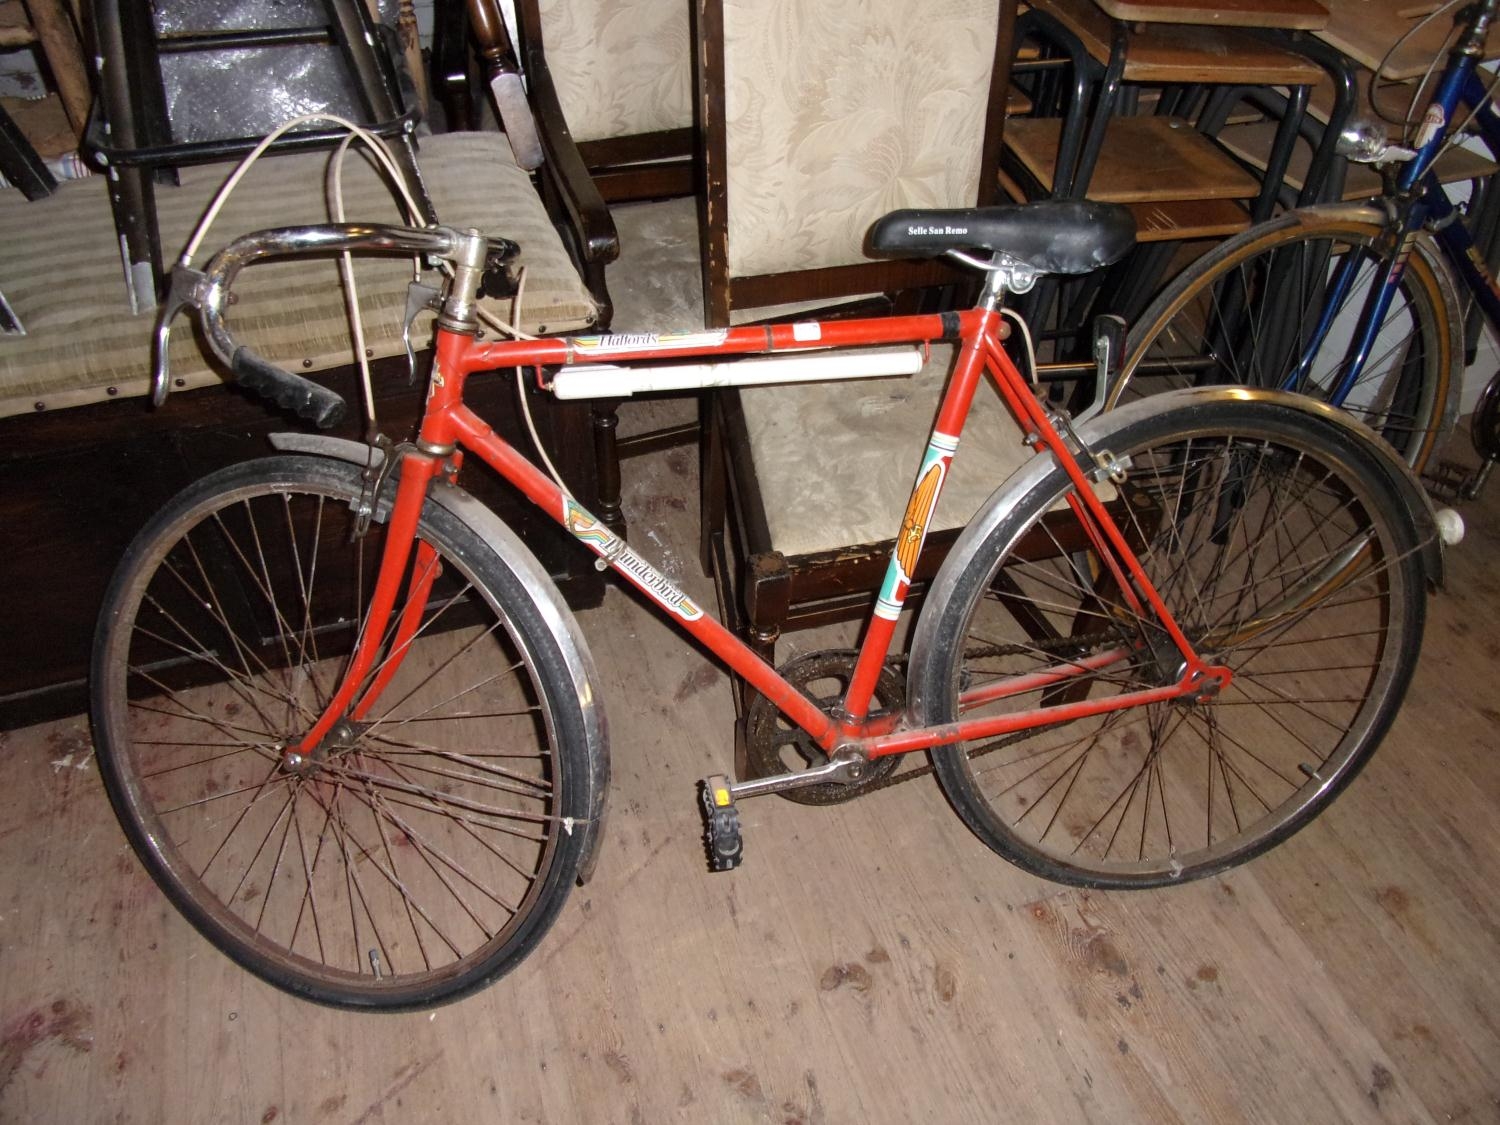 vintage thunderbird bicycle